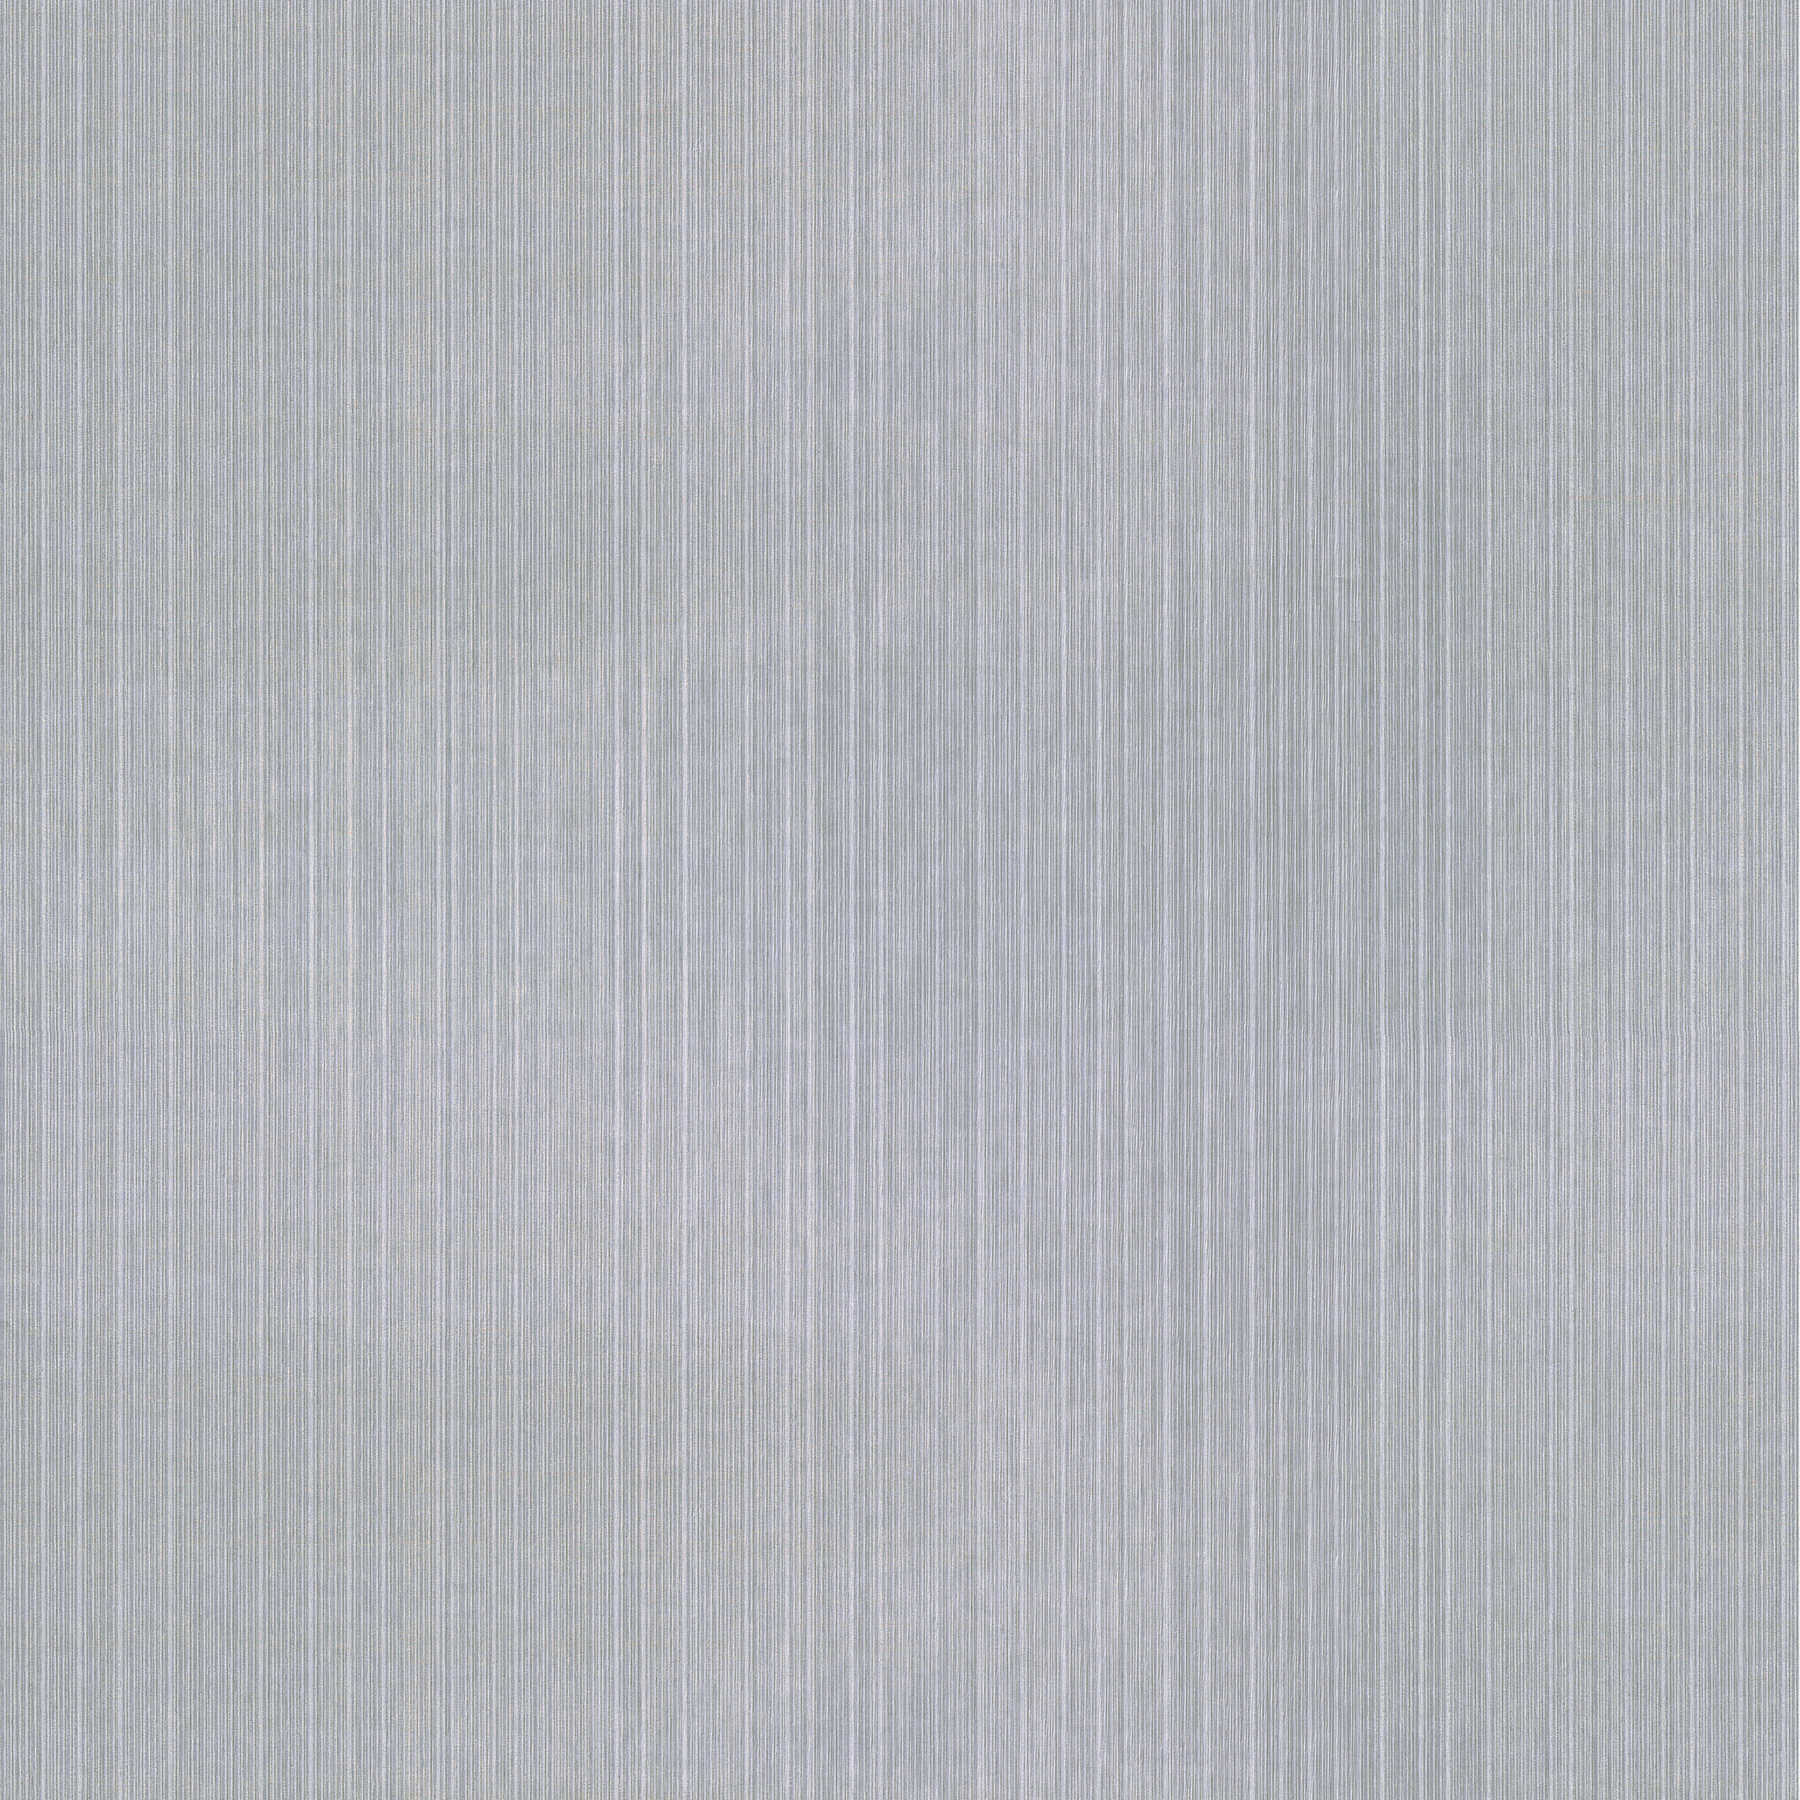 Papel pintado no tejido Melange con acentos metálicos - plata, gris
